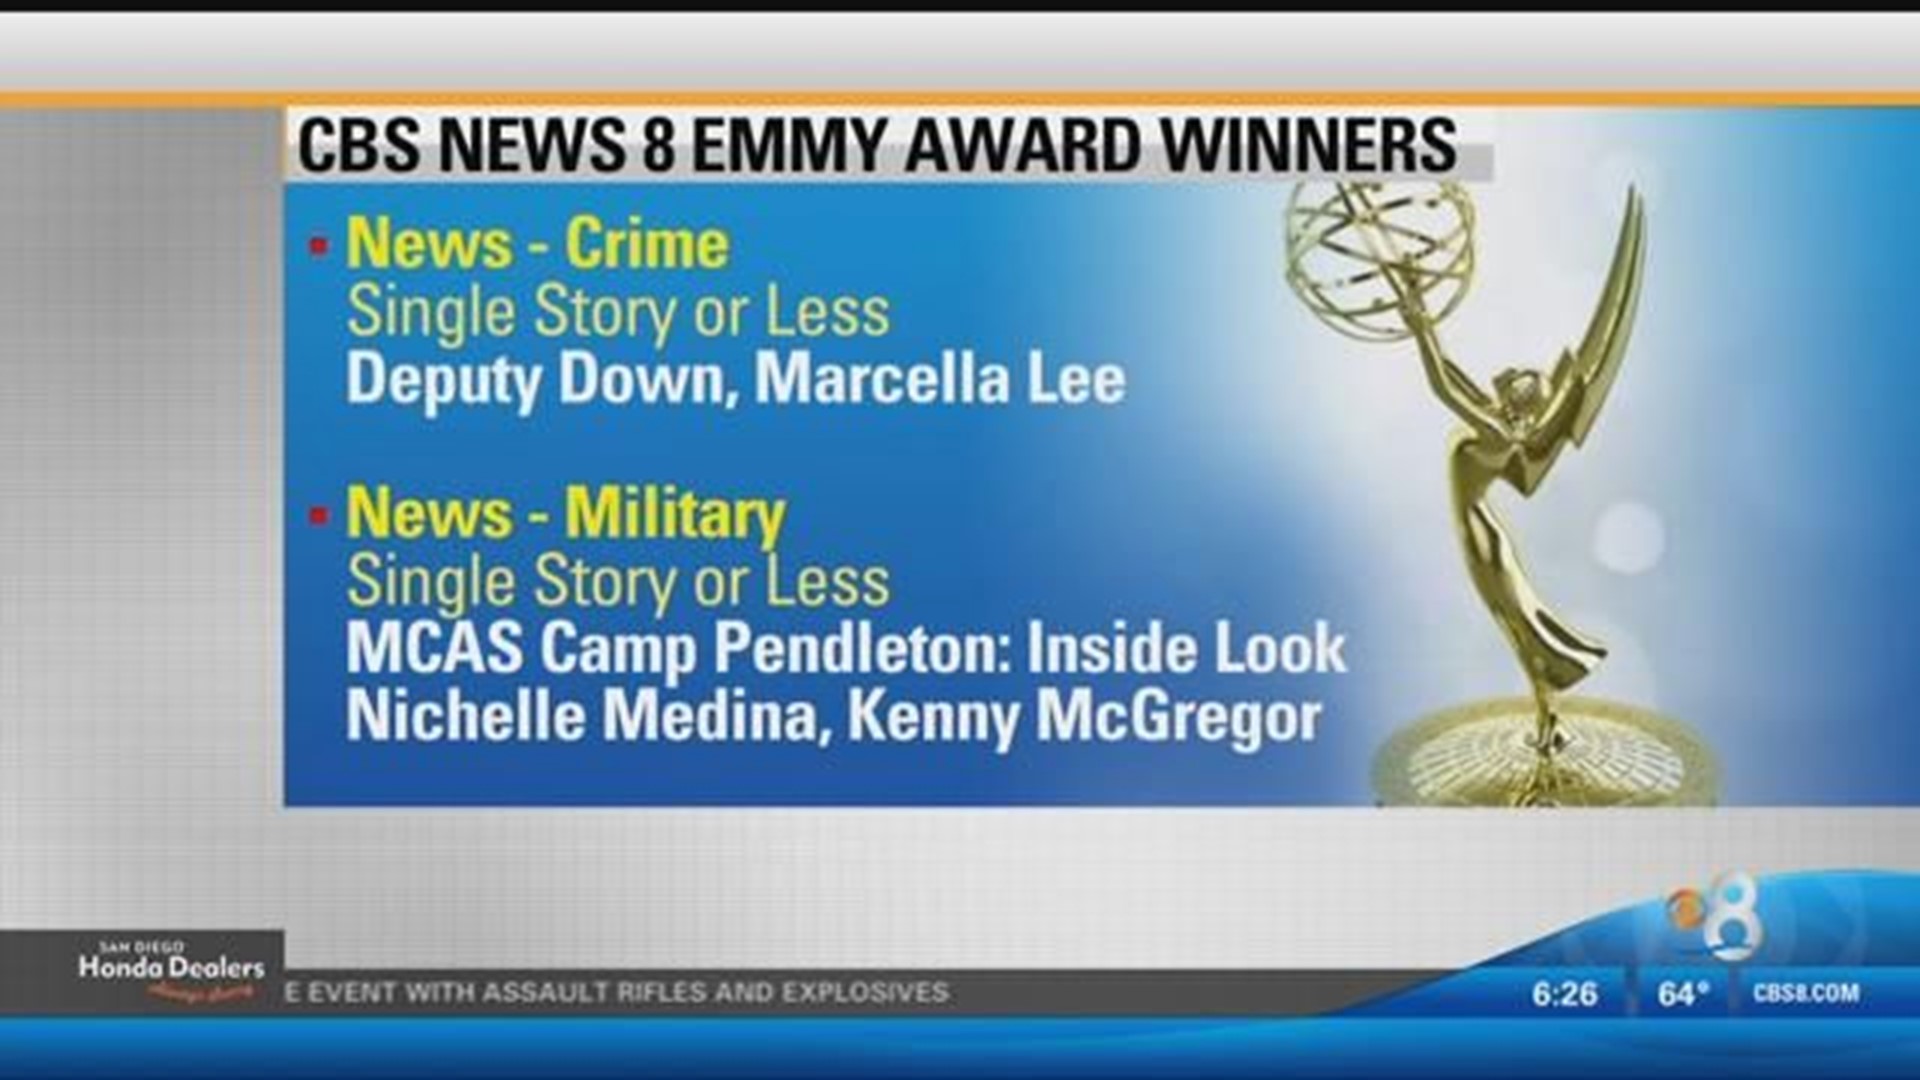 CBS News 8 takes home three Emmy Awards